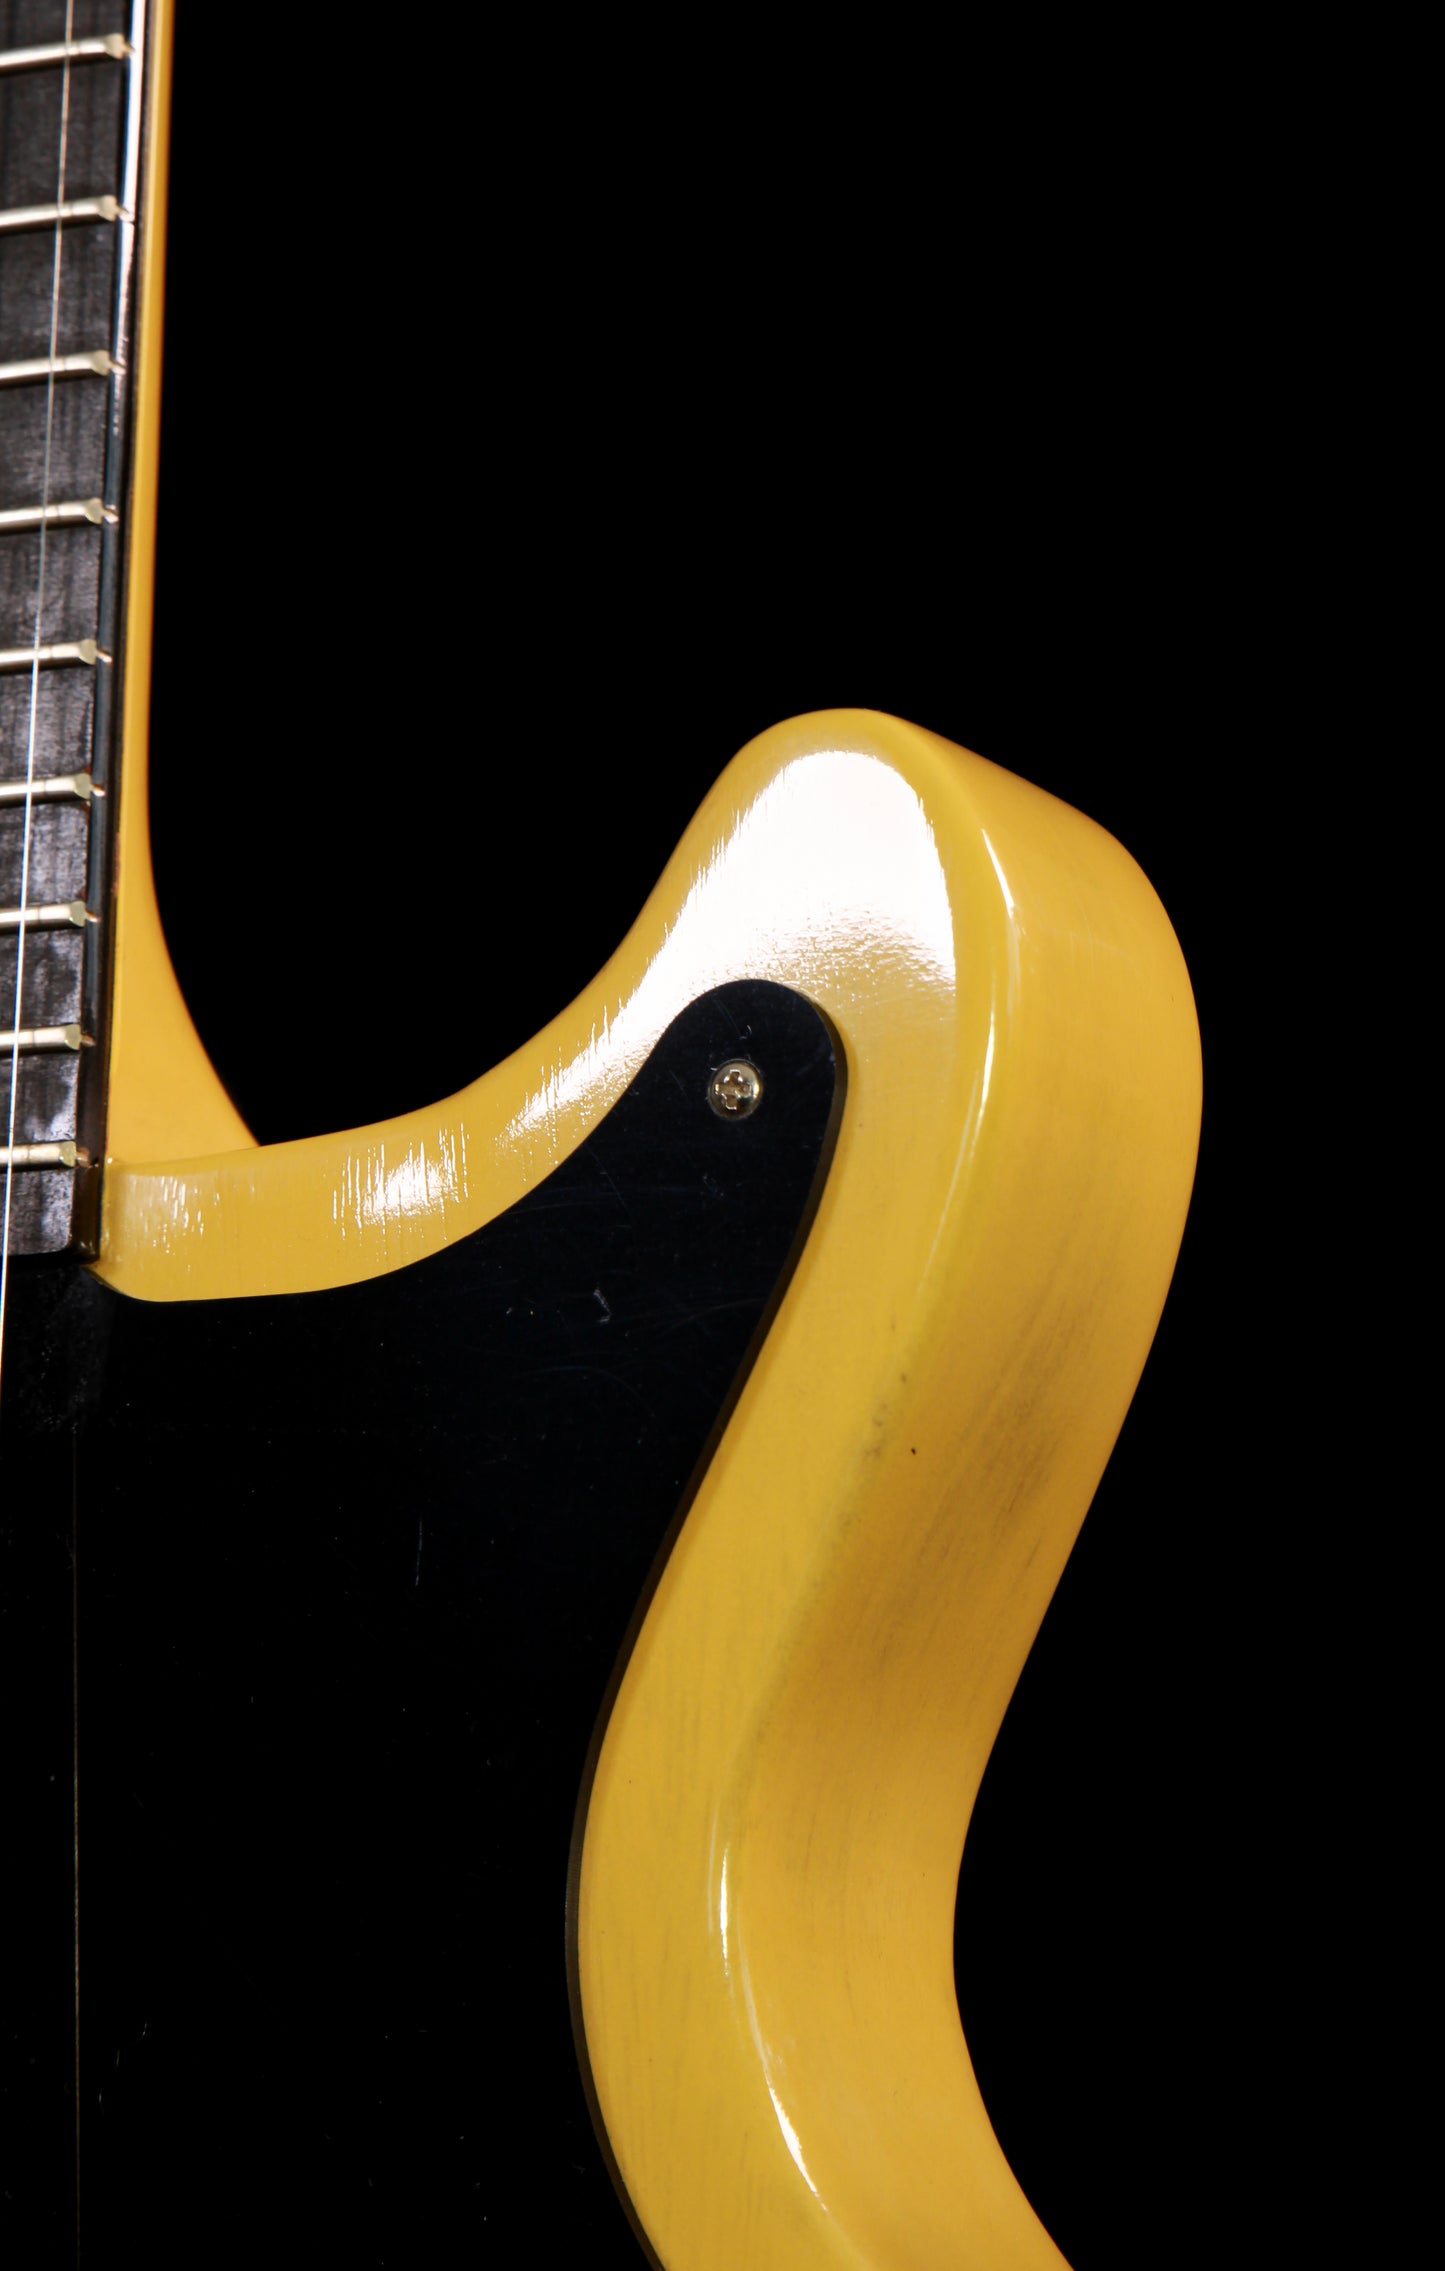 Gibson Les Paul Junior Double Cutaway Limited Run Gloss Yellow